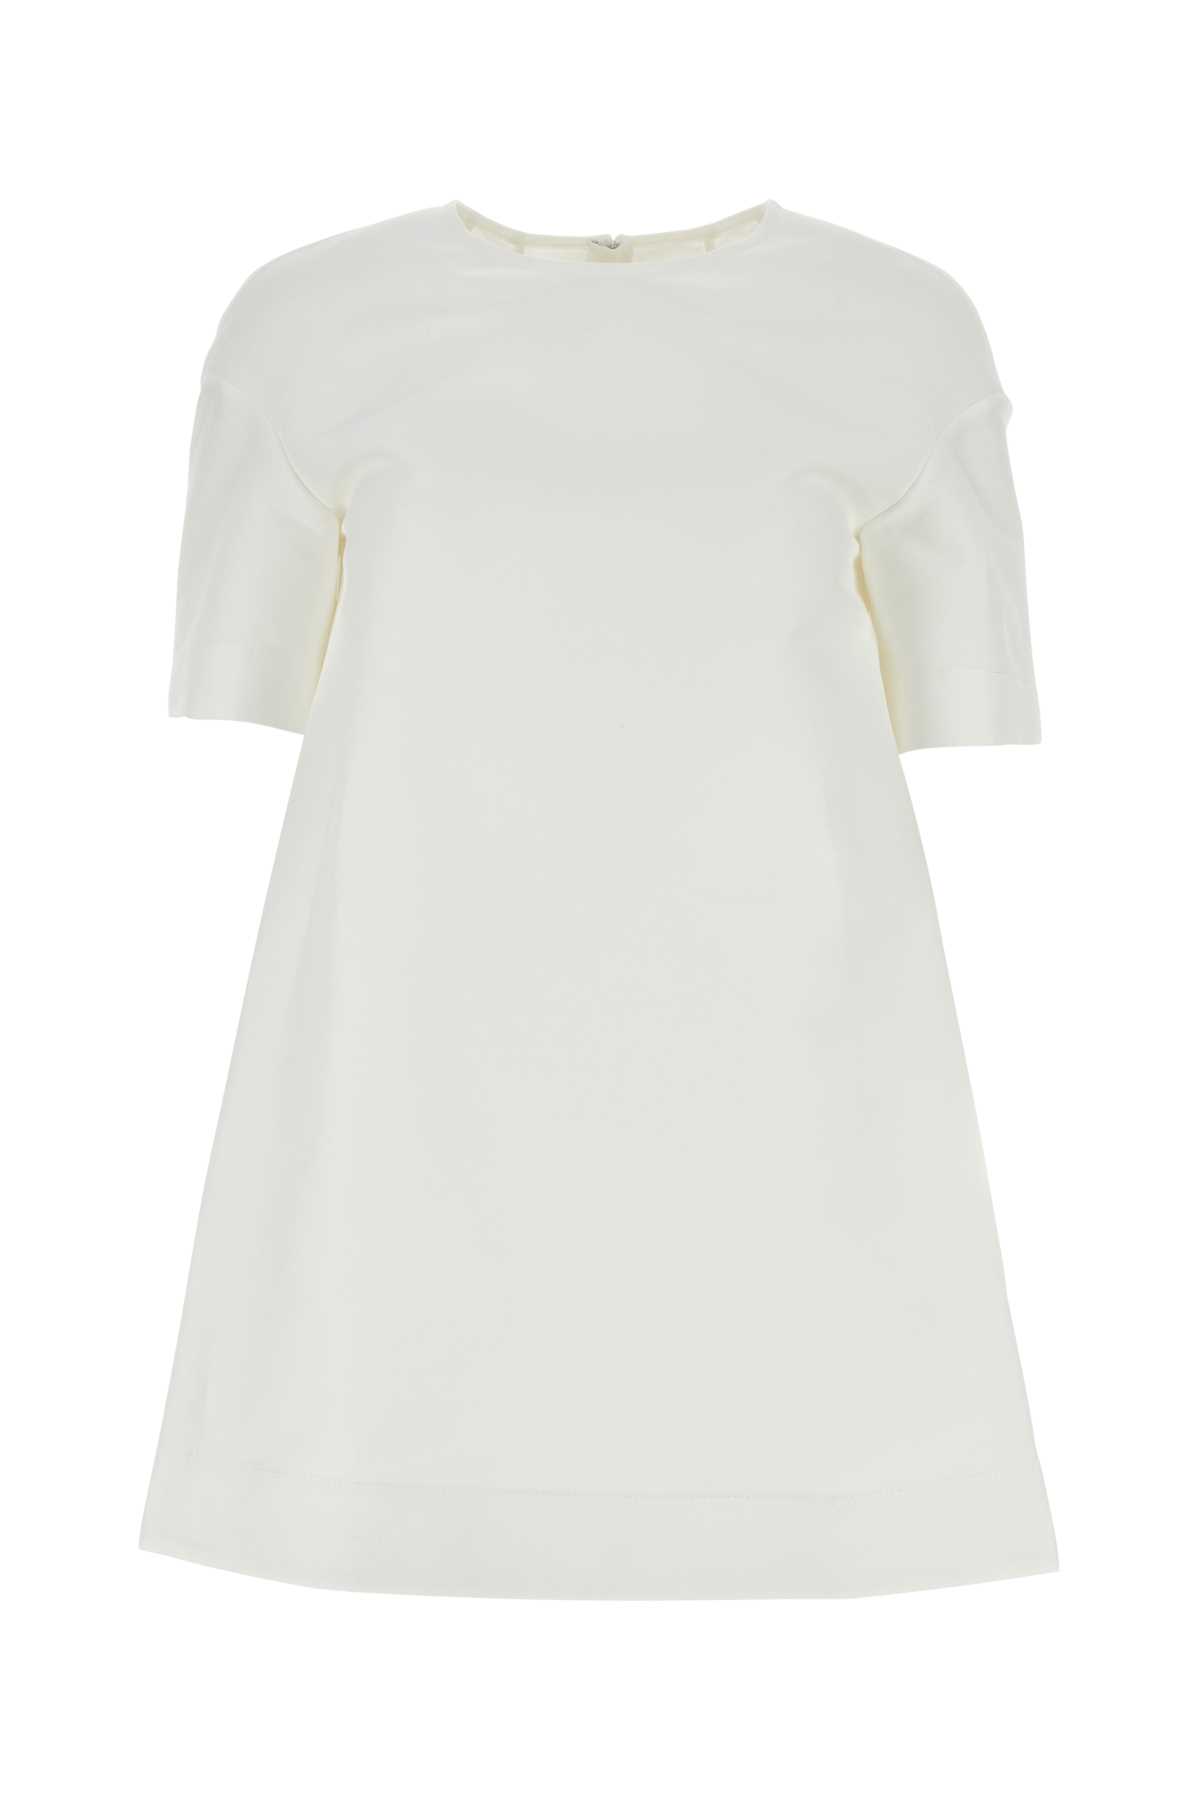 White Cotton T-shirt Dress